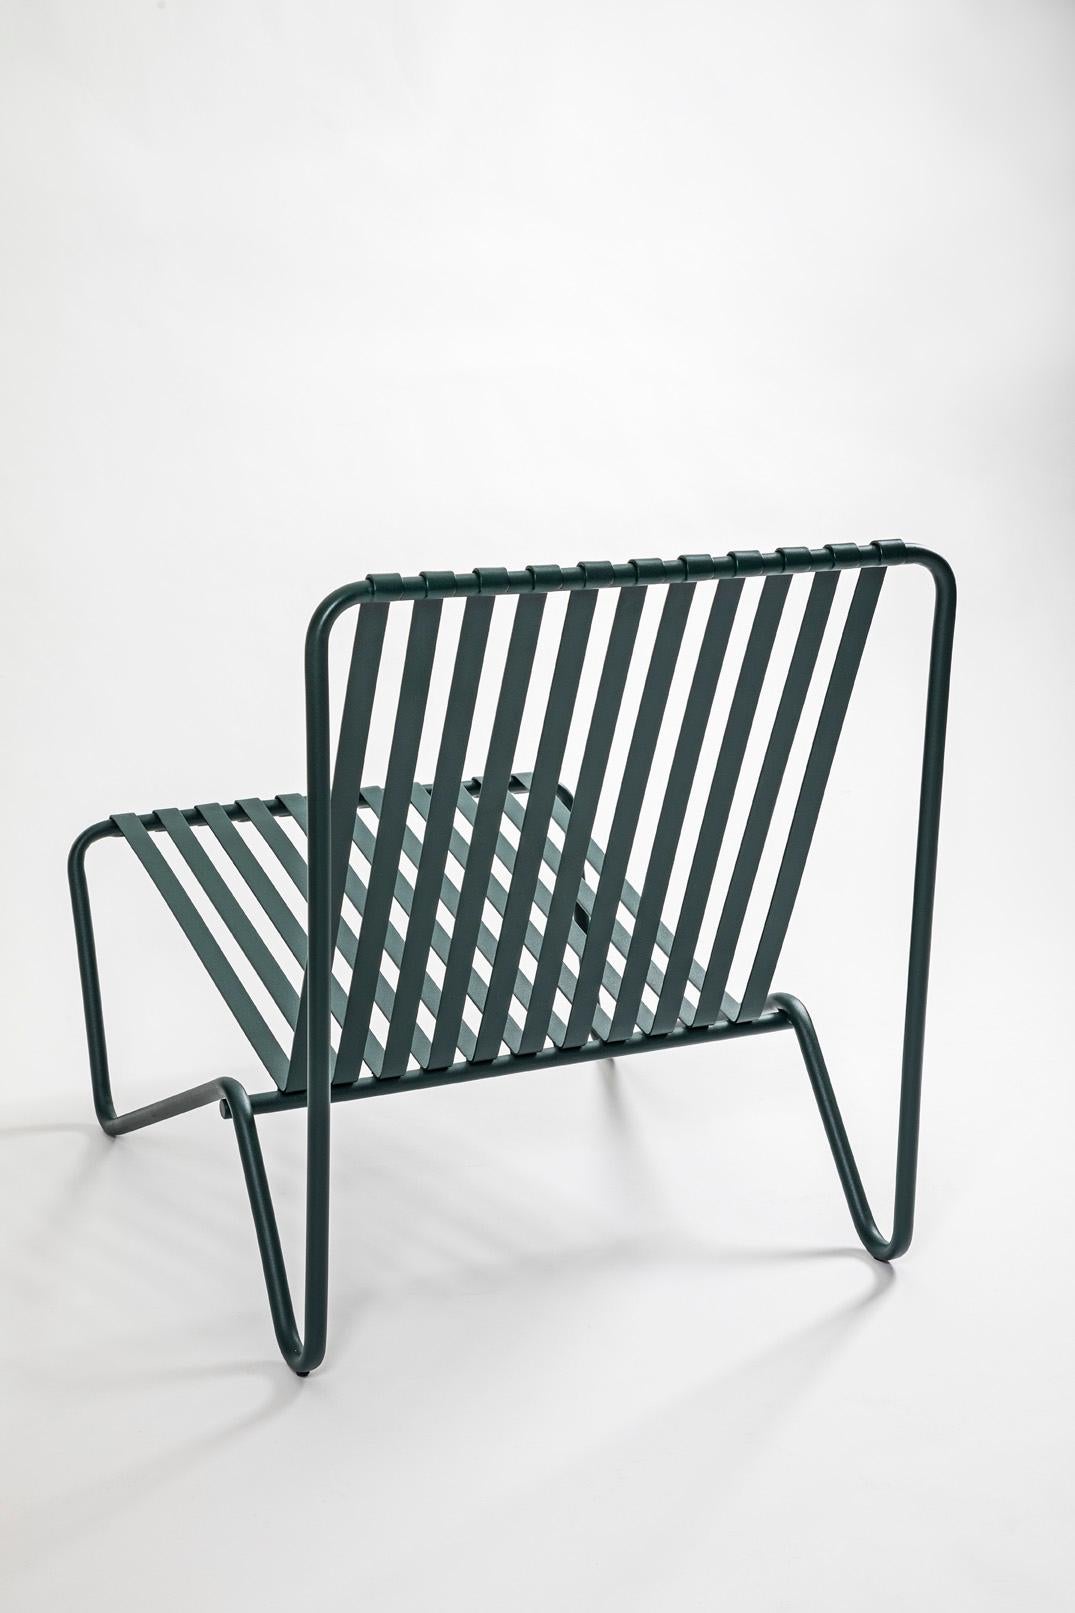 Brazilian Minimalist Outdoor Chair in Stainless Steel 